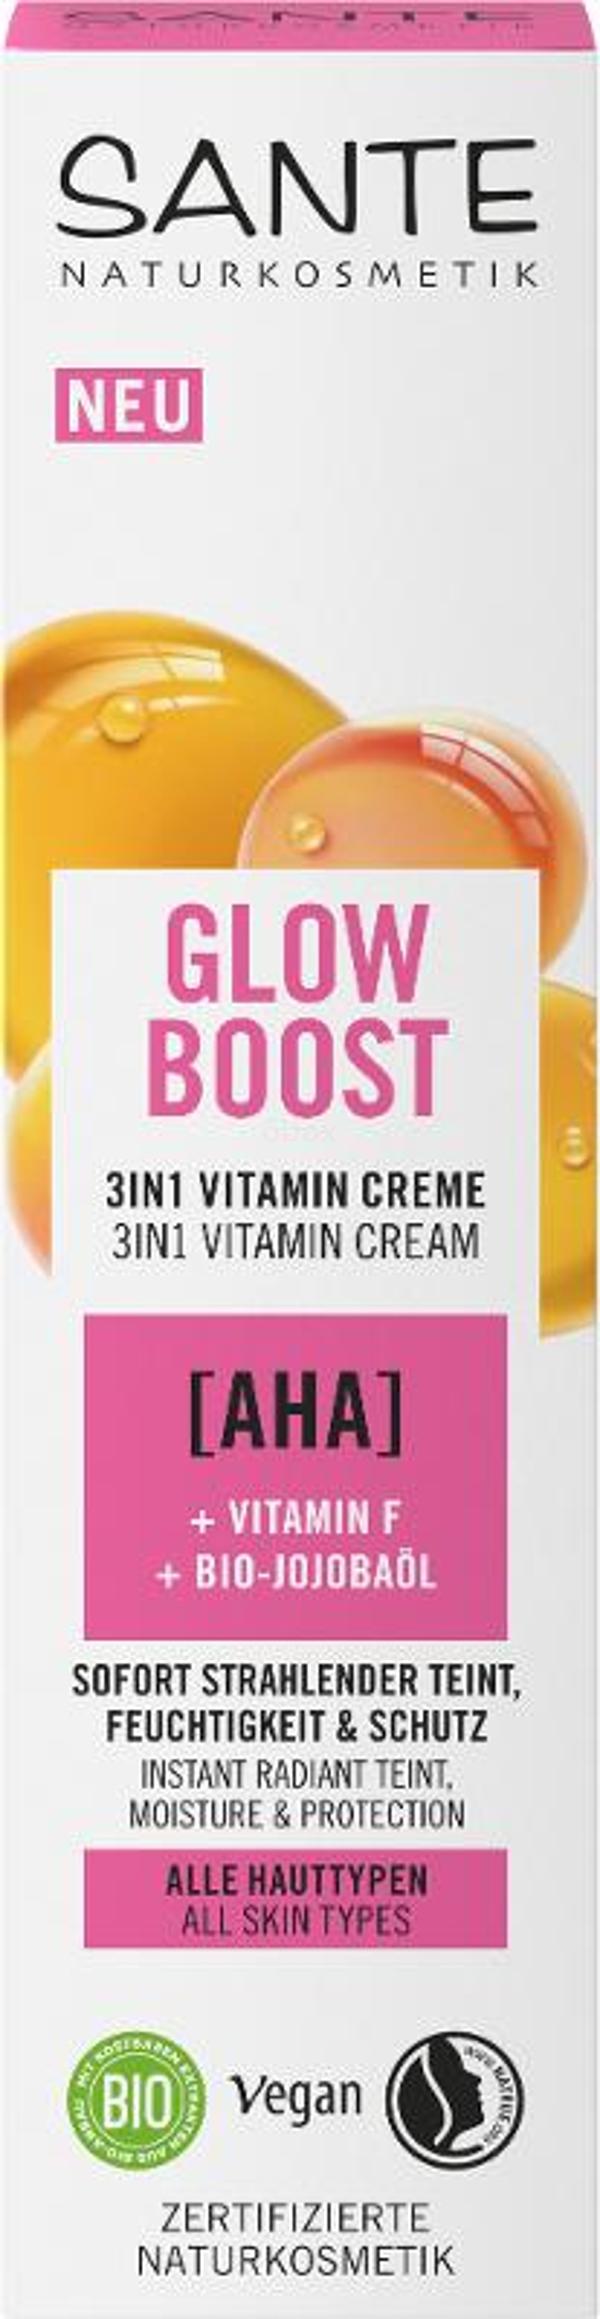 Produktfoto zu Glow Boost Vitamin Creme 30ml